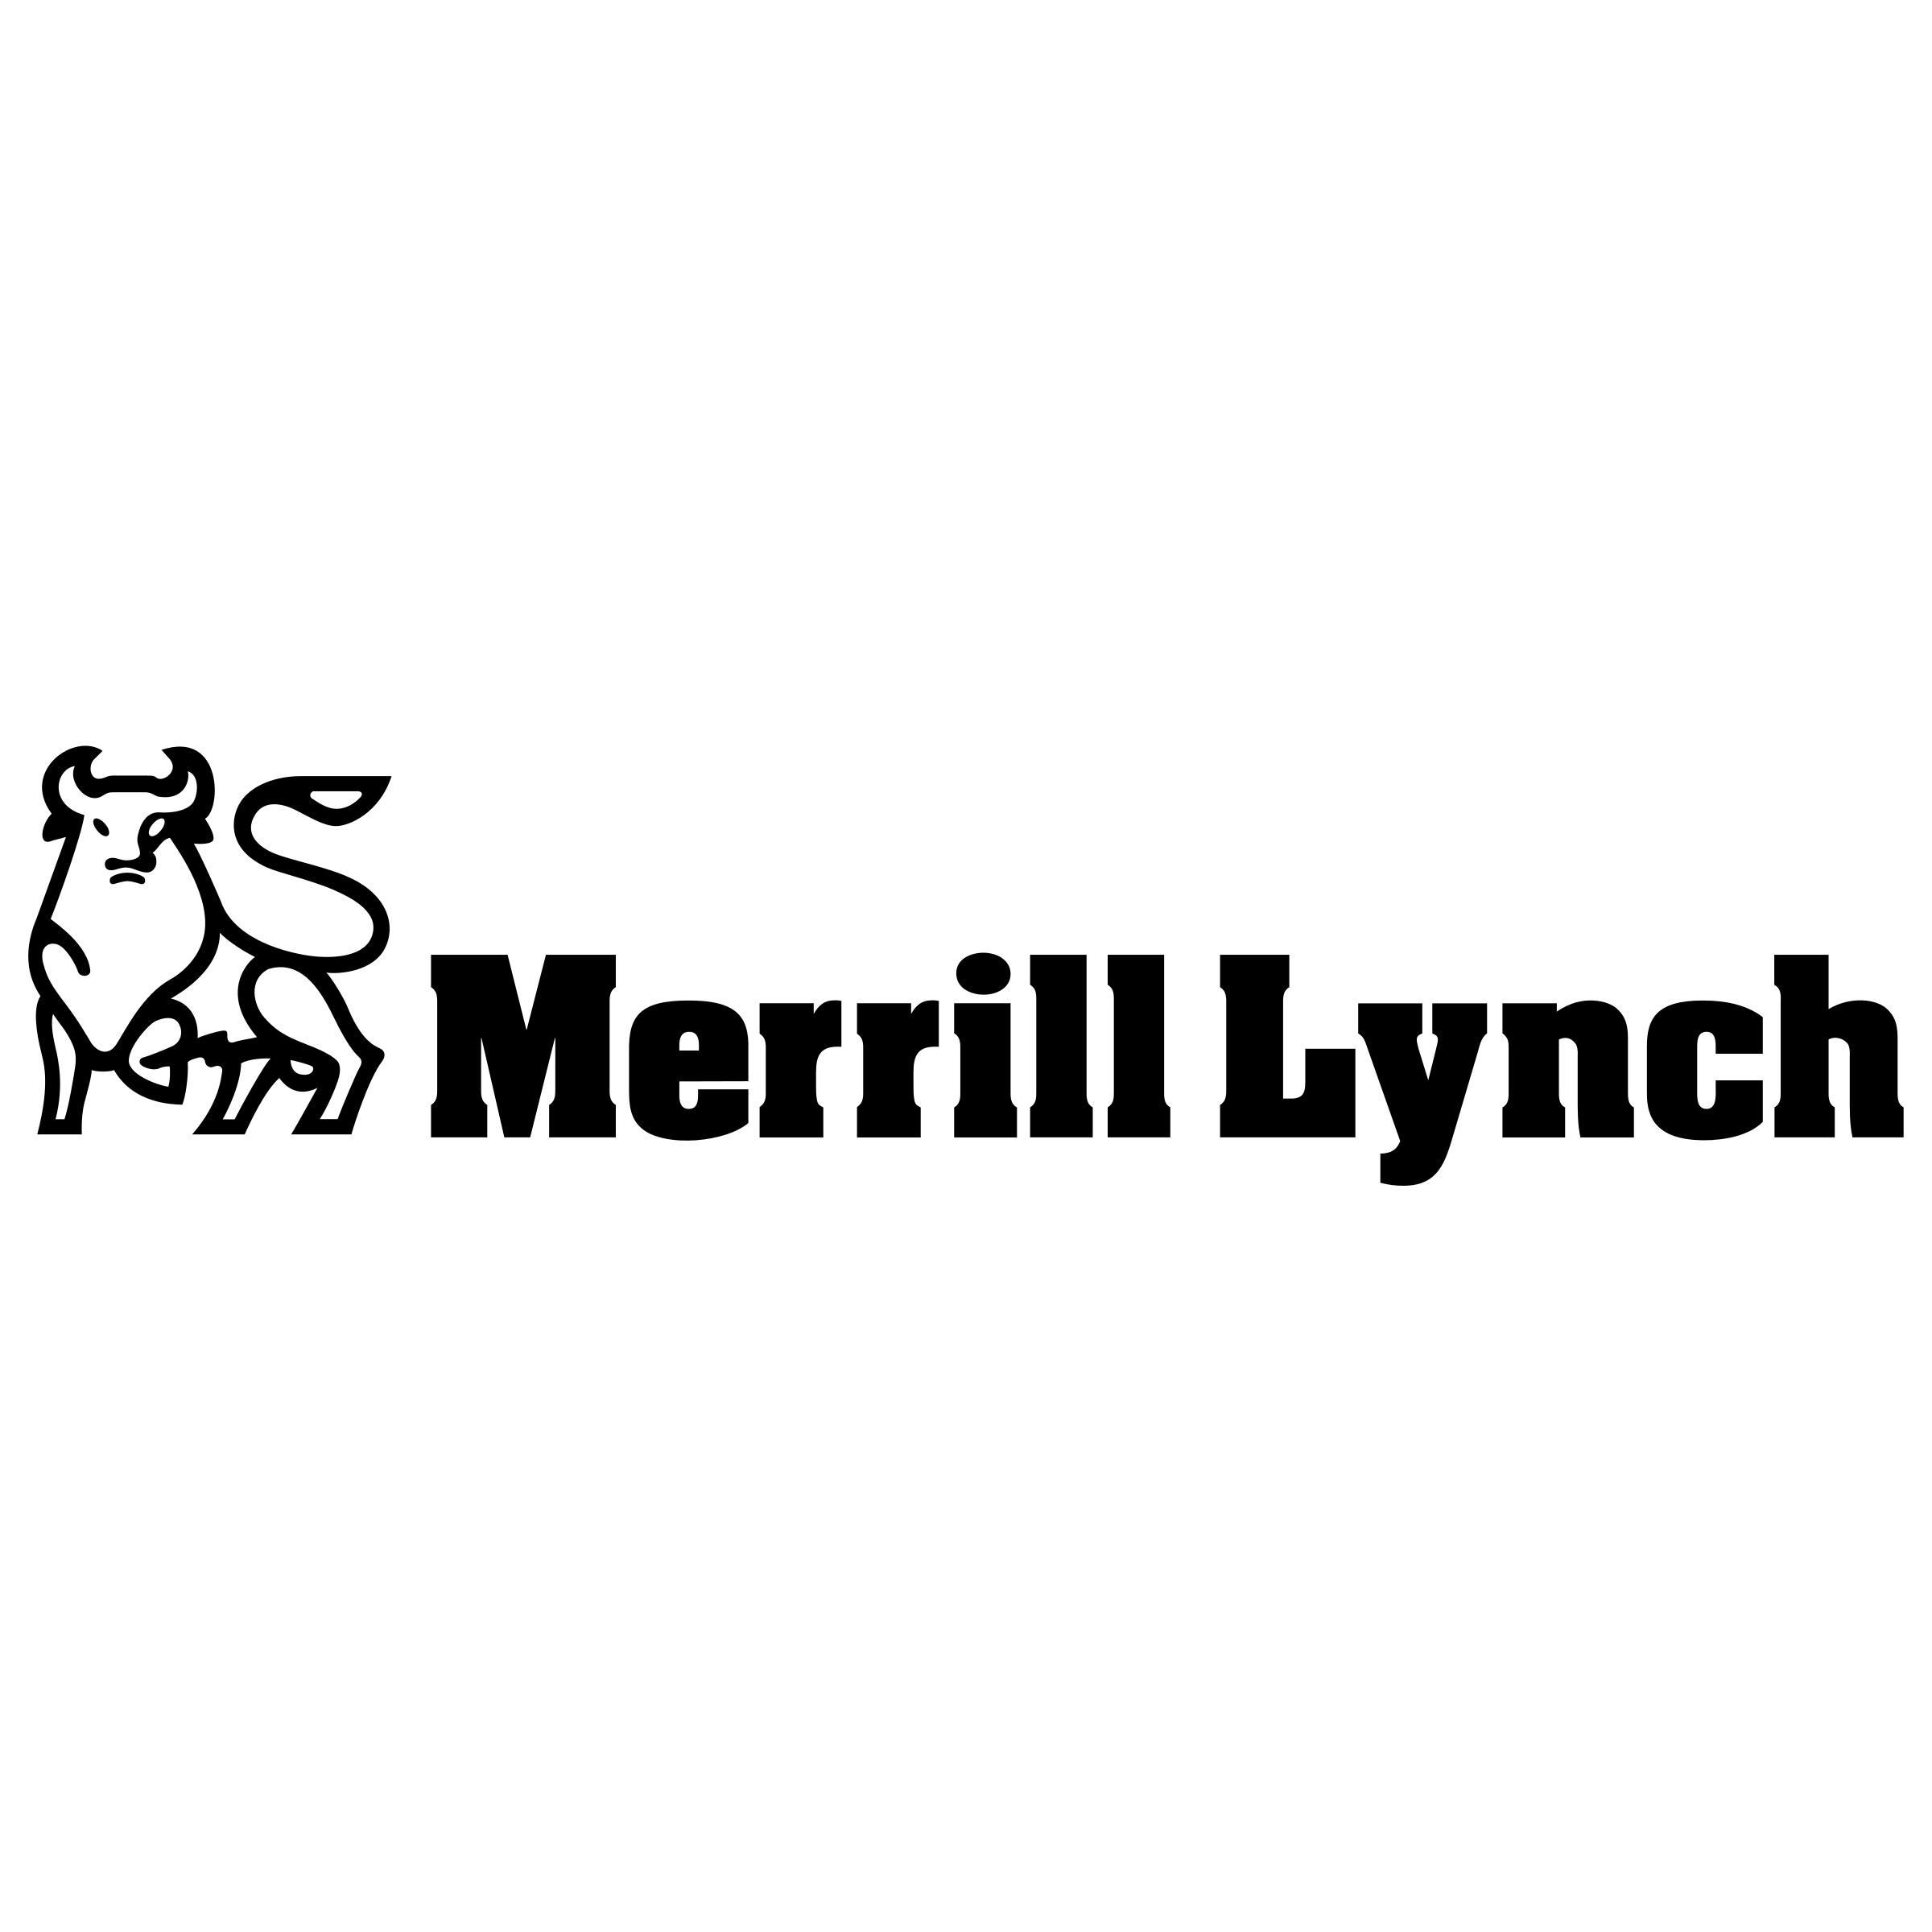 Lynch Logo - Merrill Lynch Logo PNG Transparent & SVG Vector - Freebie Supply